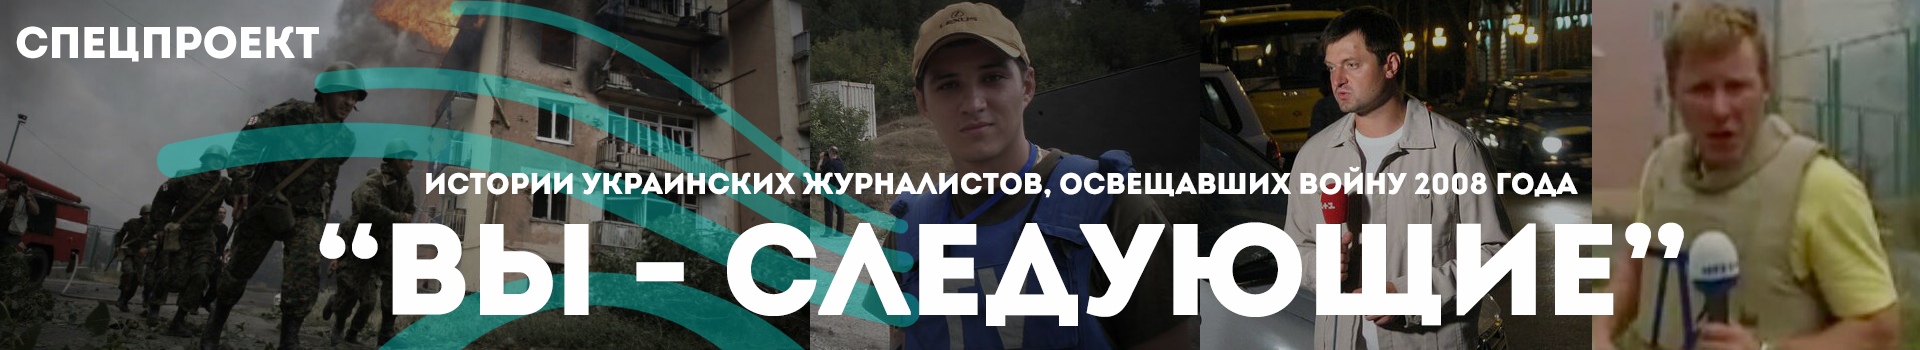 specproject 1 политика featured, война в Украине, мобилизация, Россия